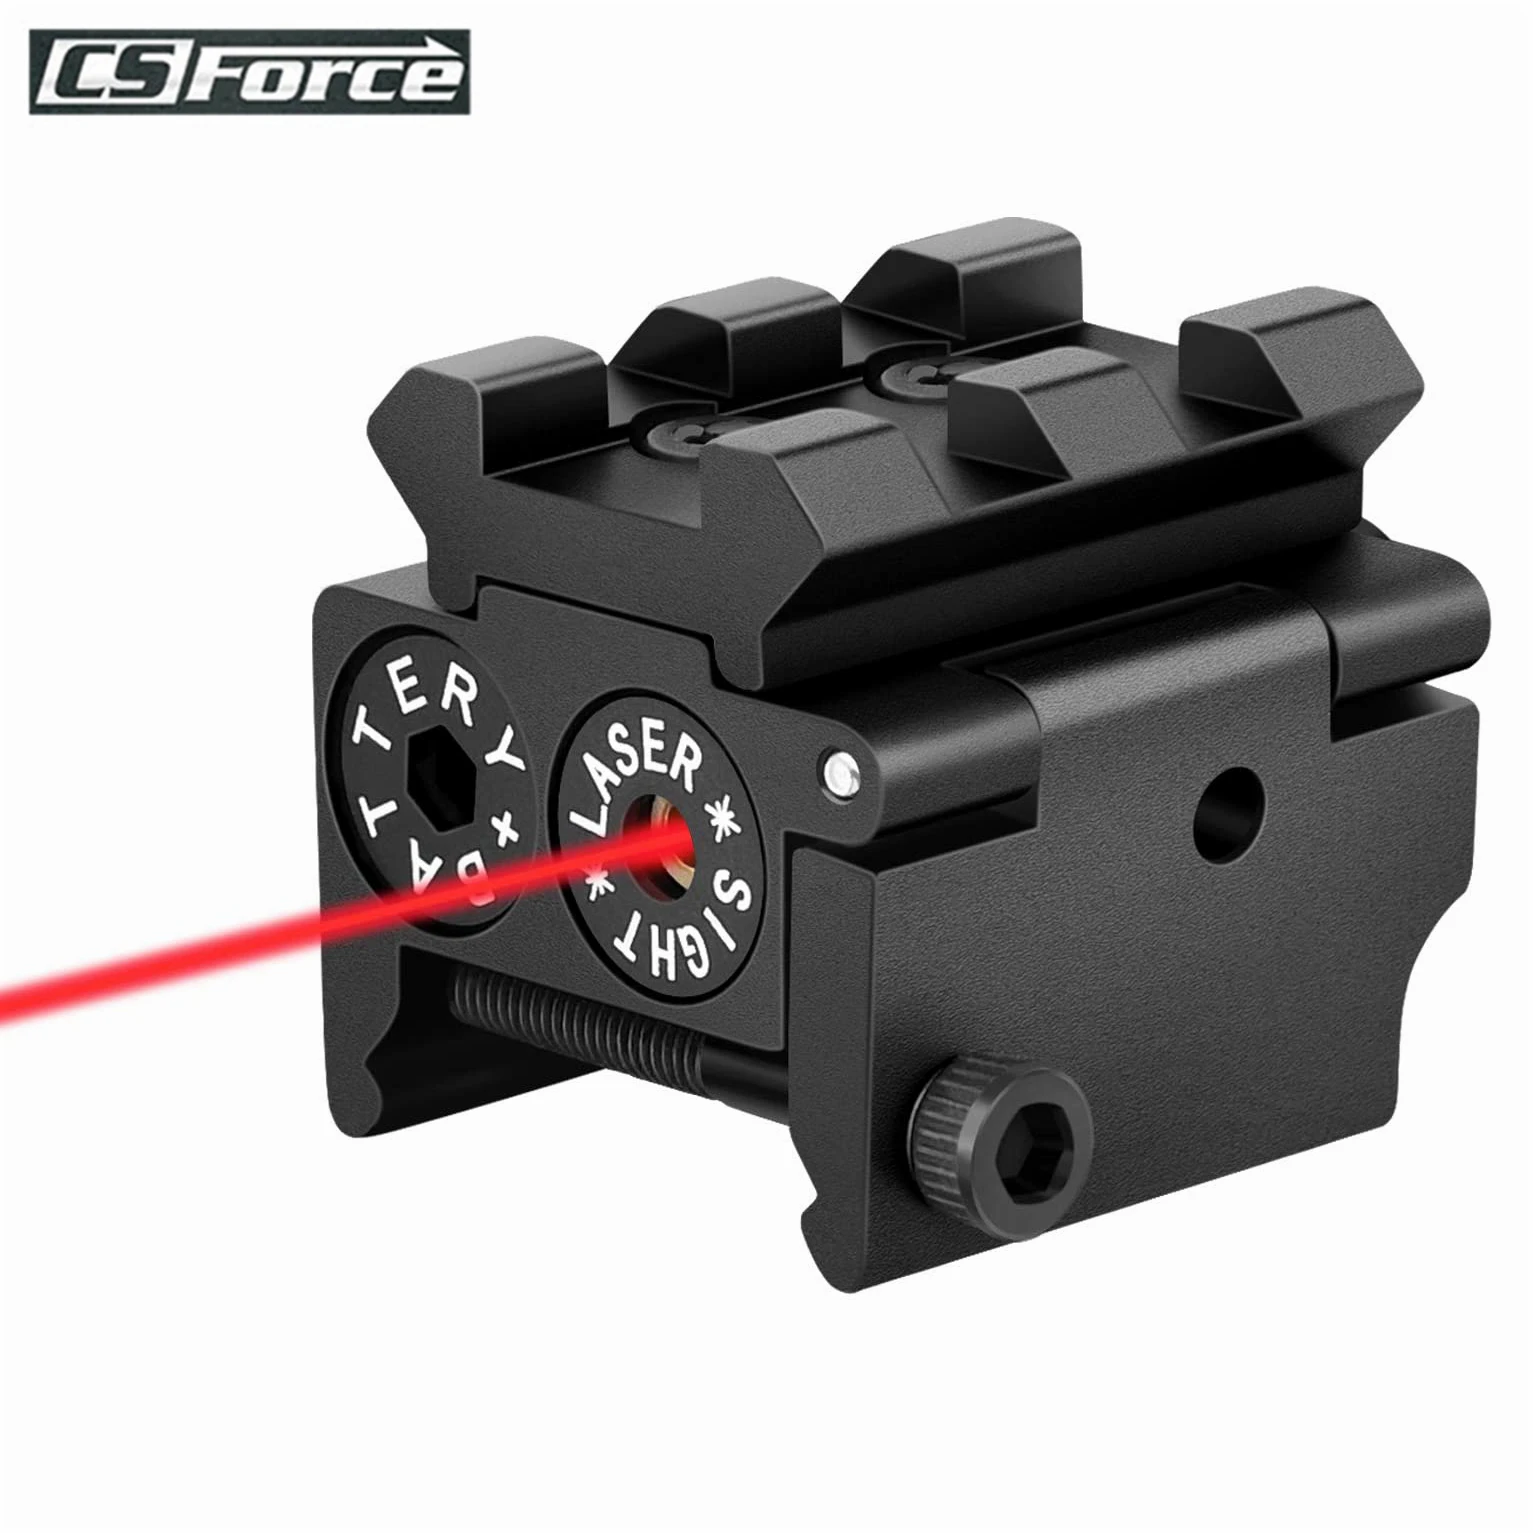 

Tactical Mini Red Dot Laser Sight for Weaver Picatinny Rail with 20mm Rail Mount Pistol Handgun Rifle Aisoft Hunting Gun Laser